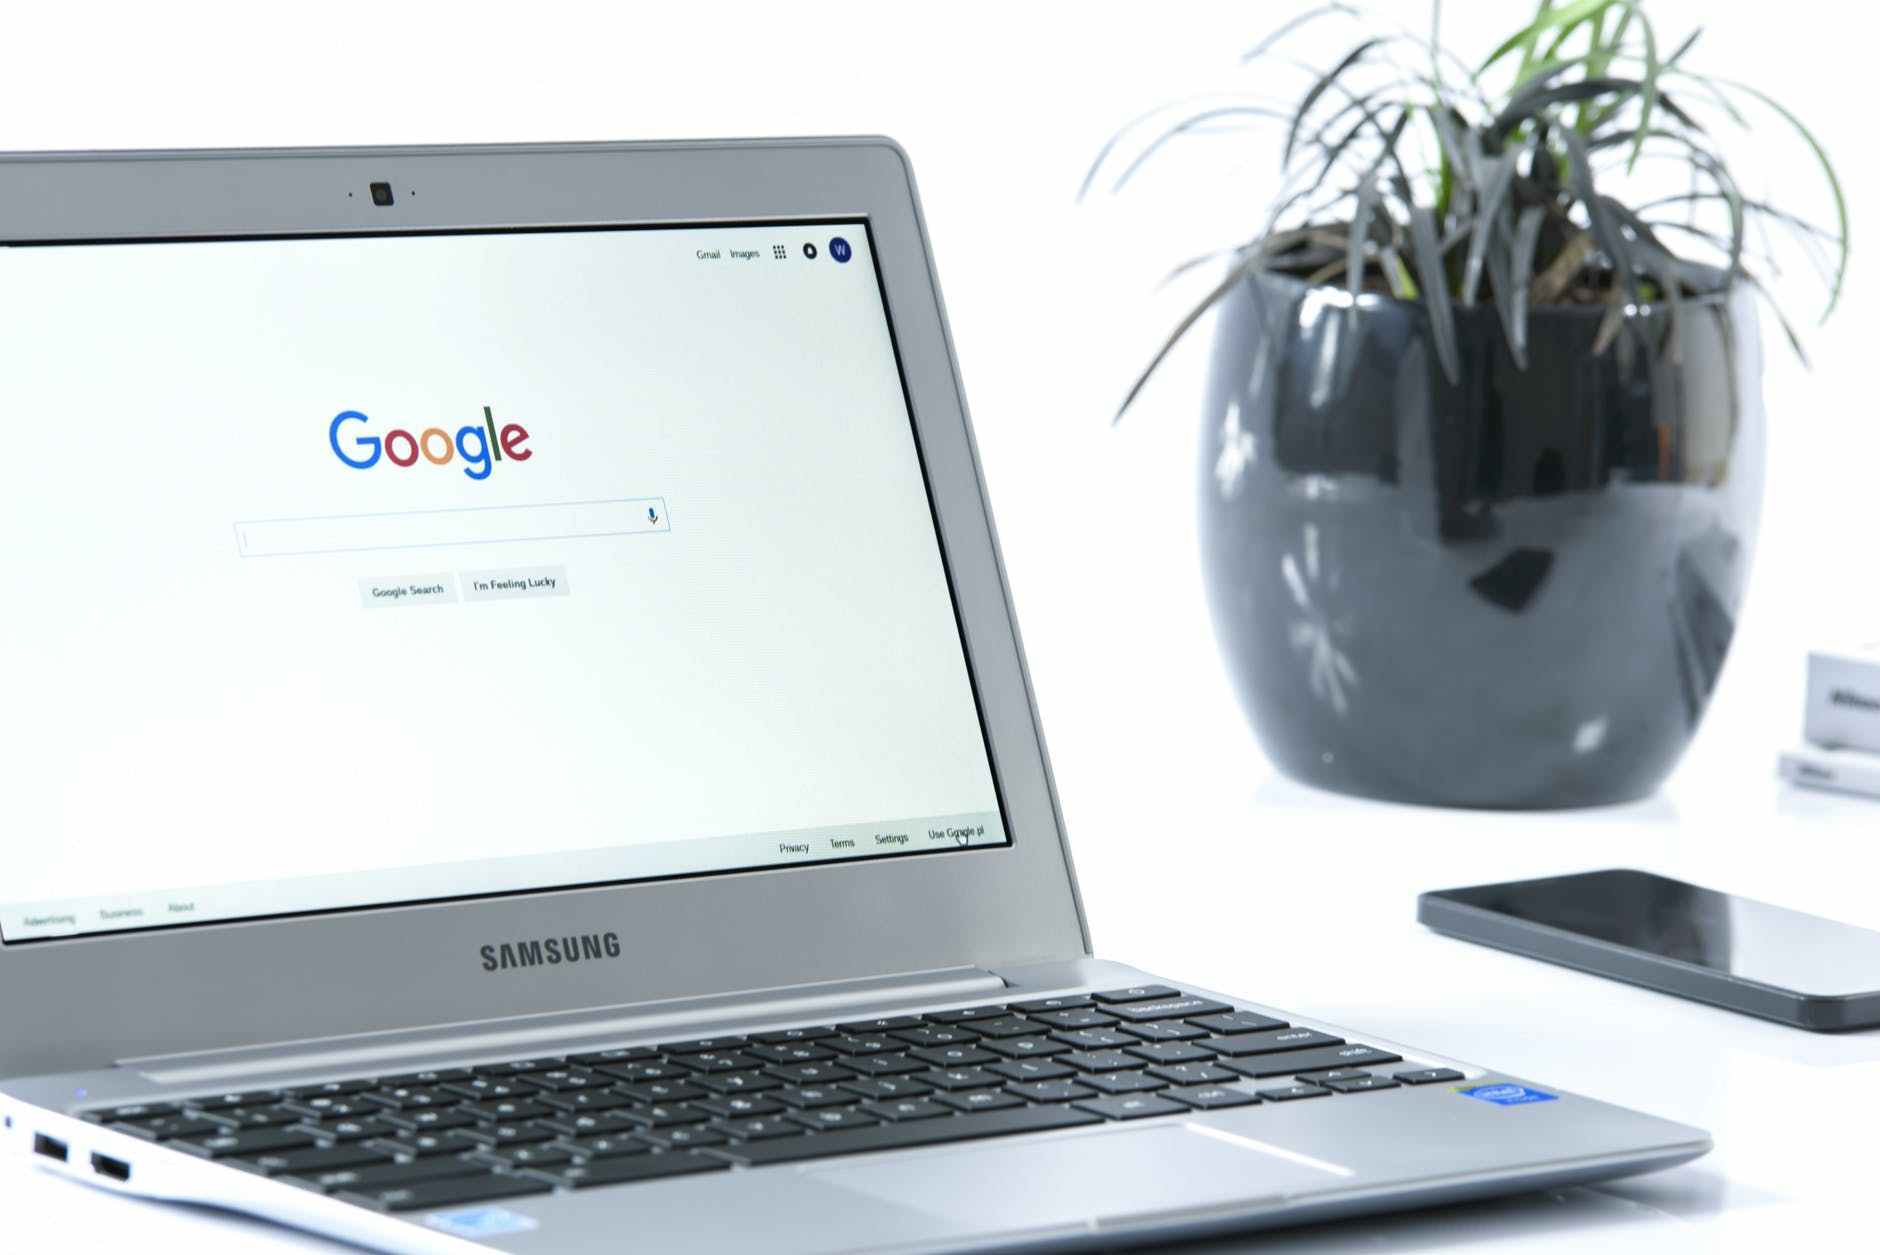 Google 强烈呼吁 Chrome 用户立刻进行更新 避免骇客利用漏洞入侵设备 